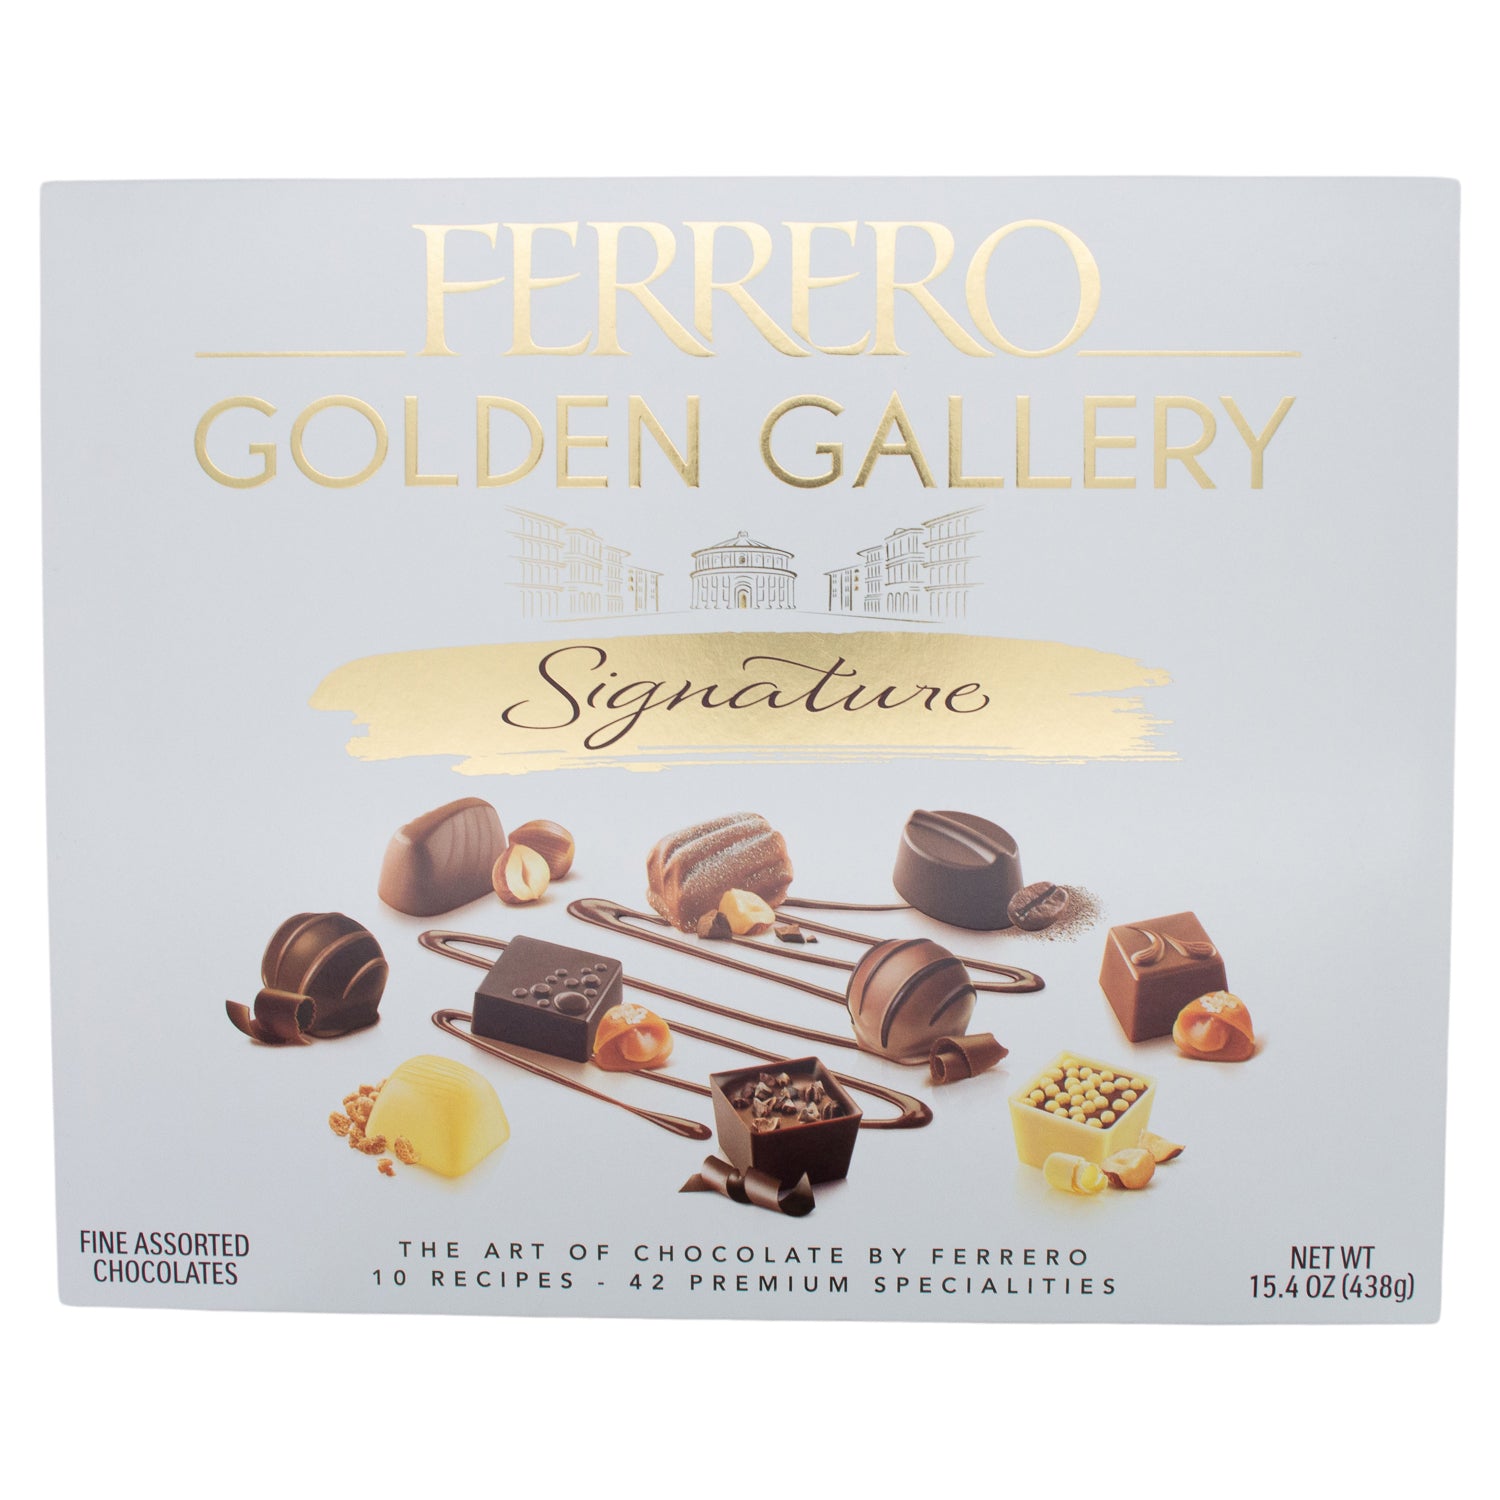 Ferrerro Golden Gallery Signature Fine Assorted Chocolates Meltable Ferrero 15.4 Ounce 